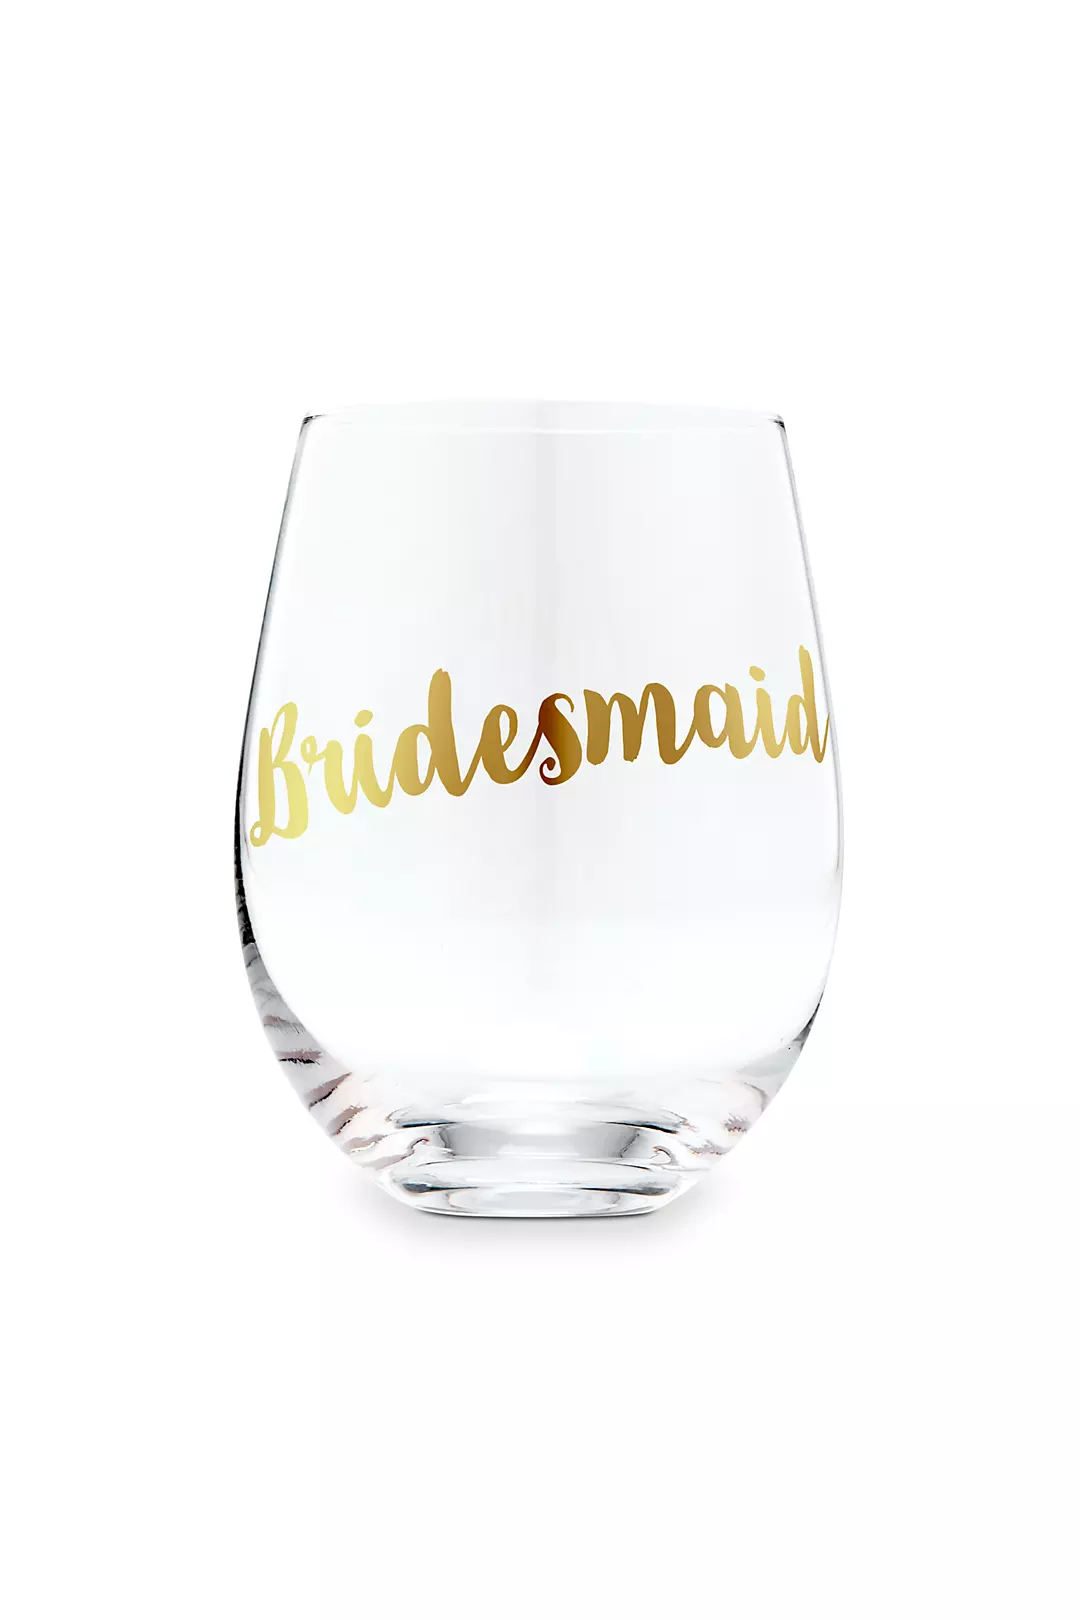 Set of 6 Wedding Glasses, Bridesmaid Gift Glasses, Maid of Honor